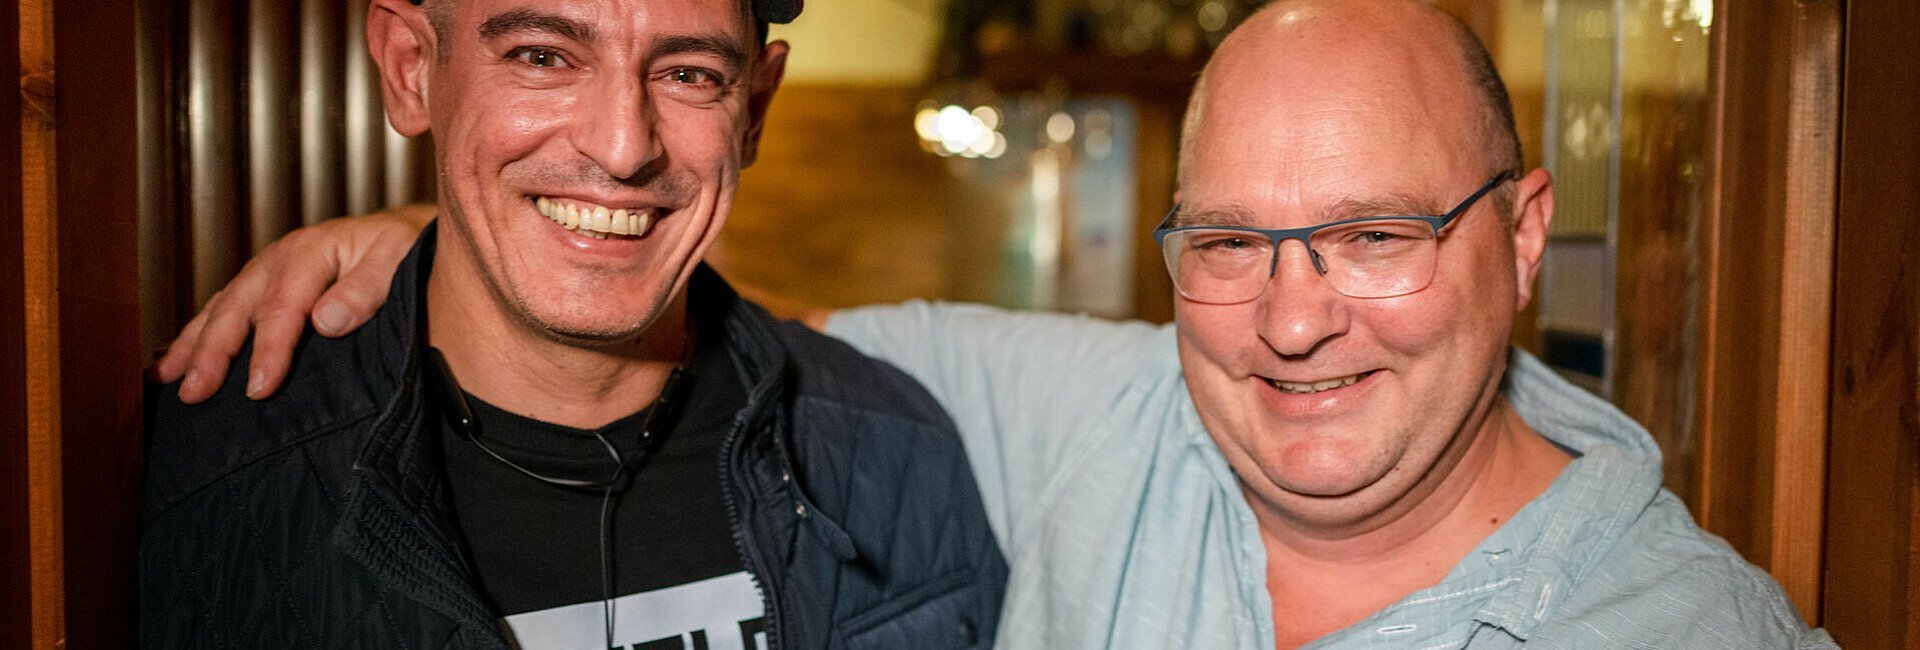 Murat und Holger lachend Arm in Arm in der Gaststätte „Vingster Pohl“